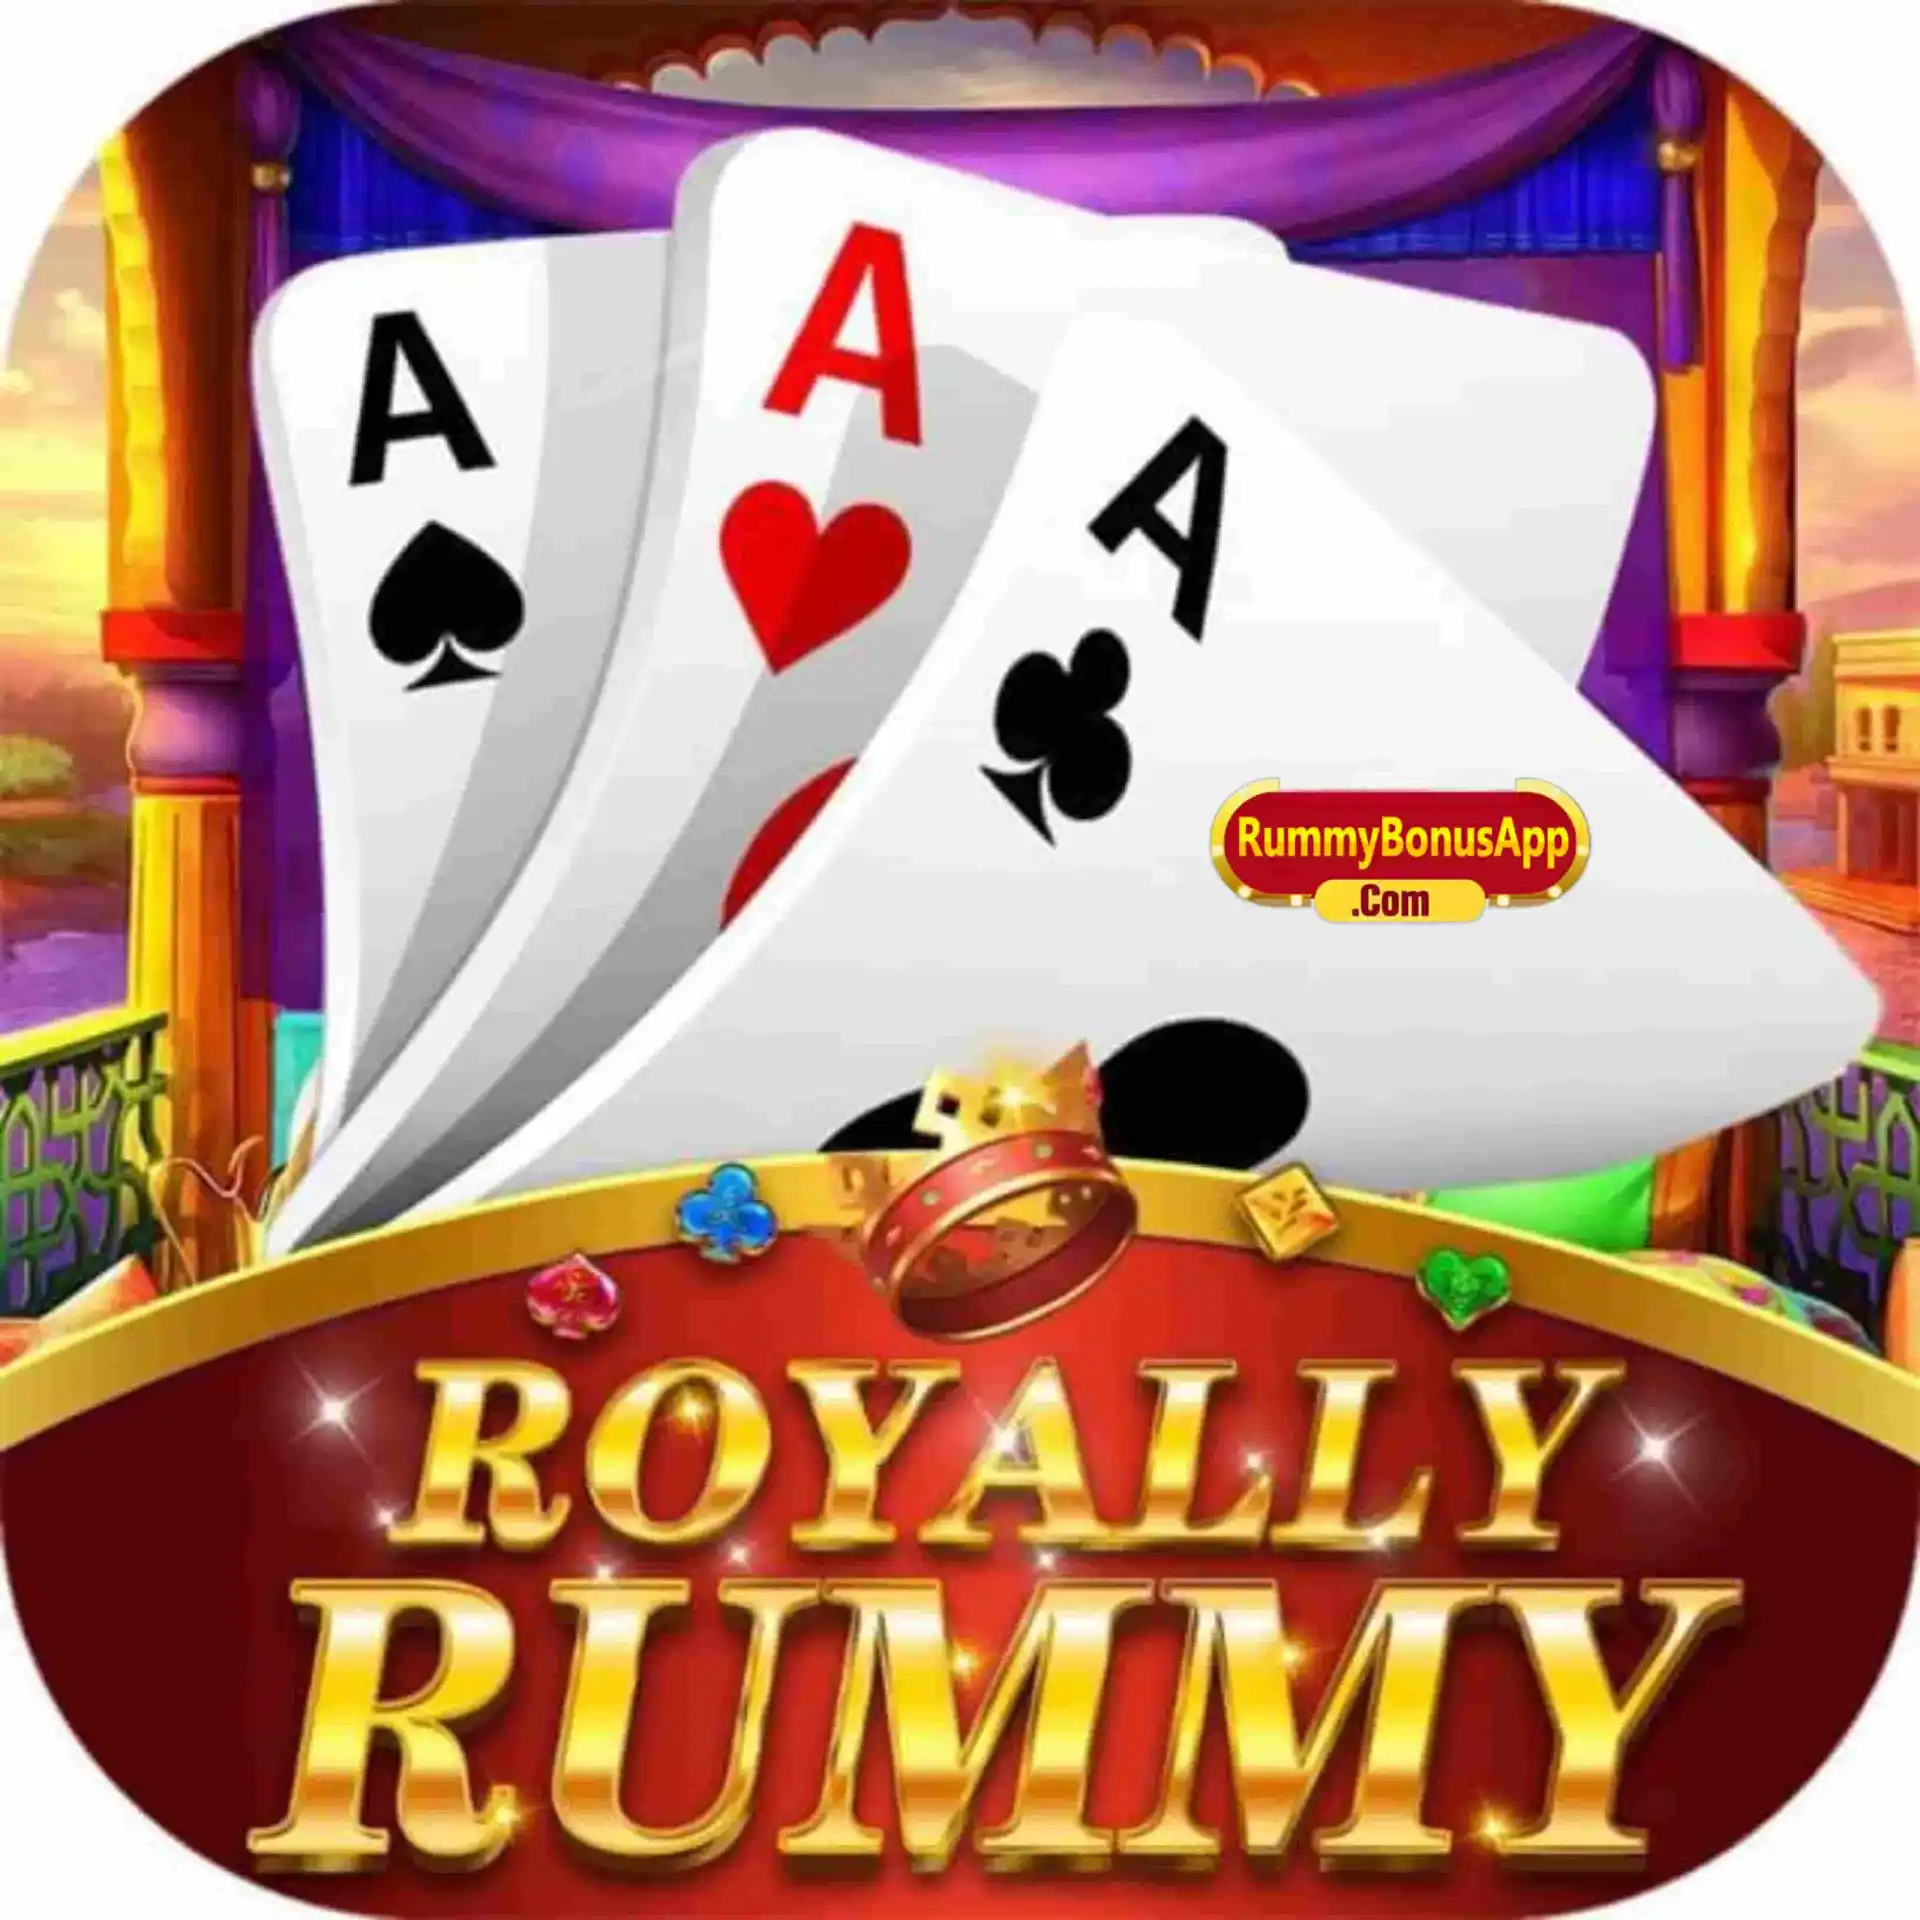 Royally Rummy - Global Game App - Global Game Apps - GlobalGameDownloads